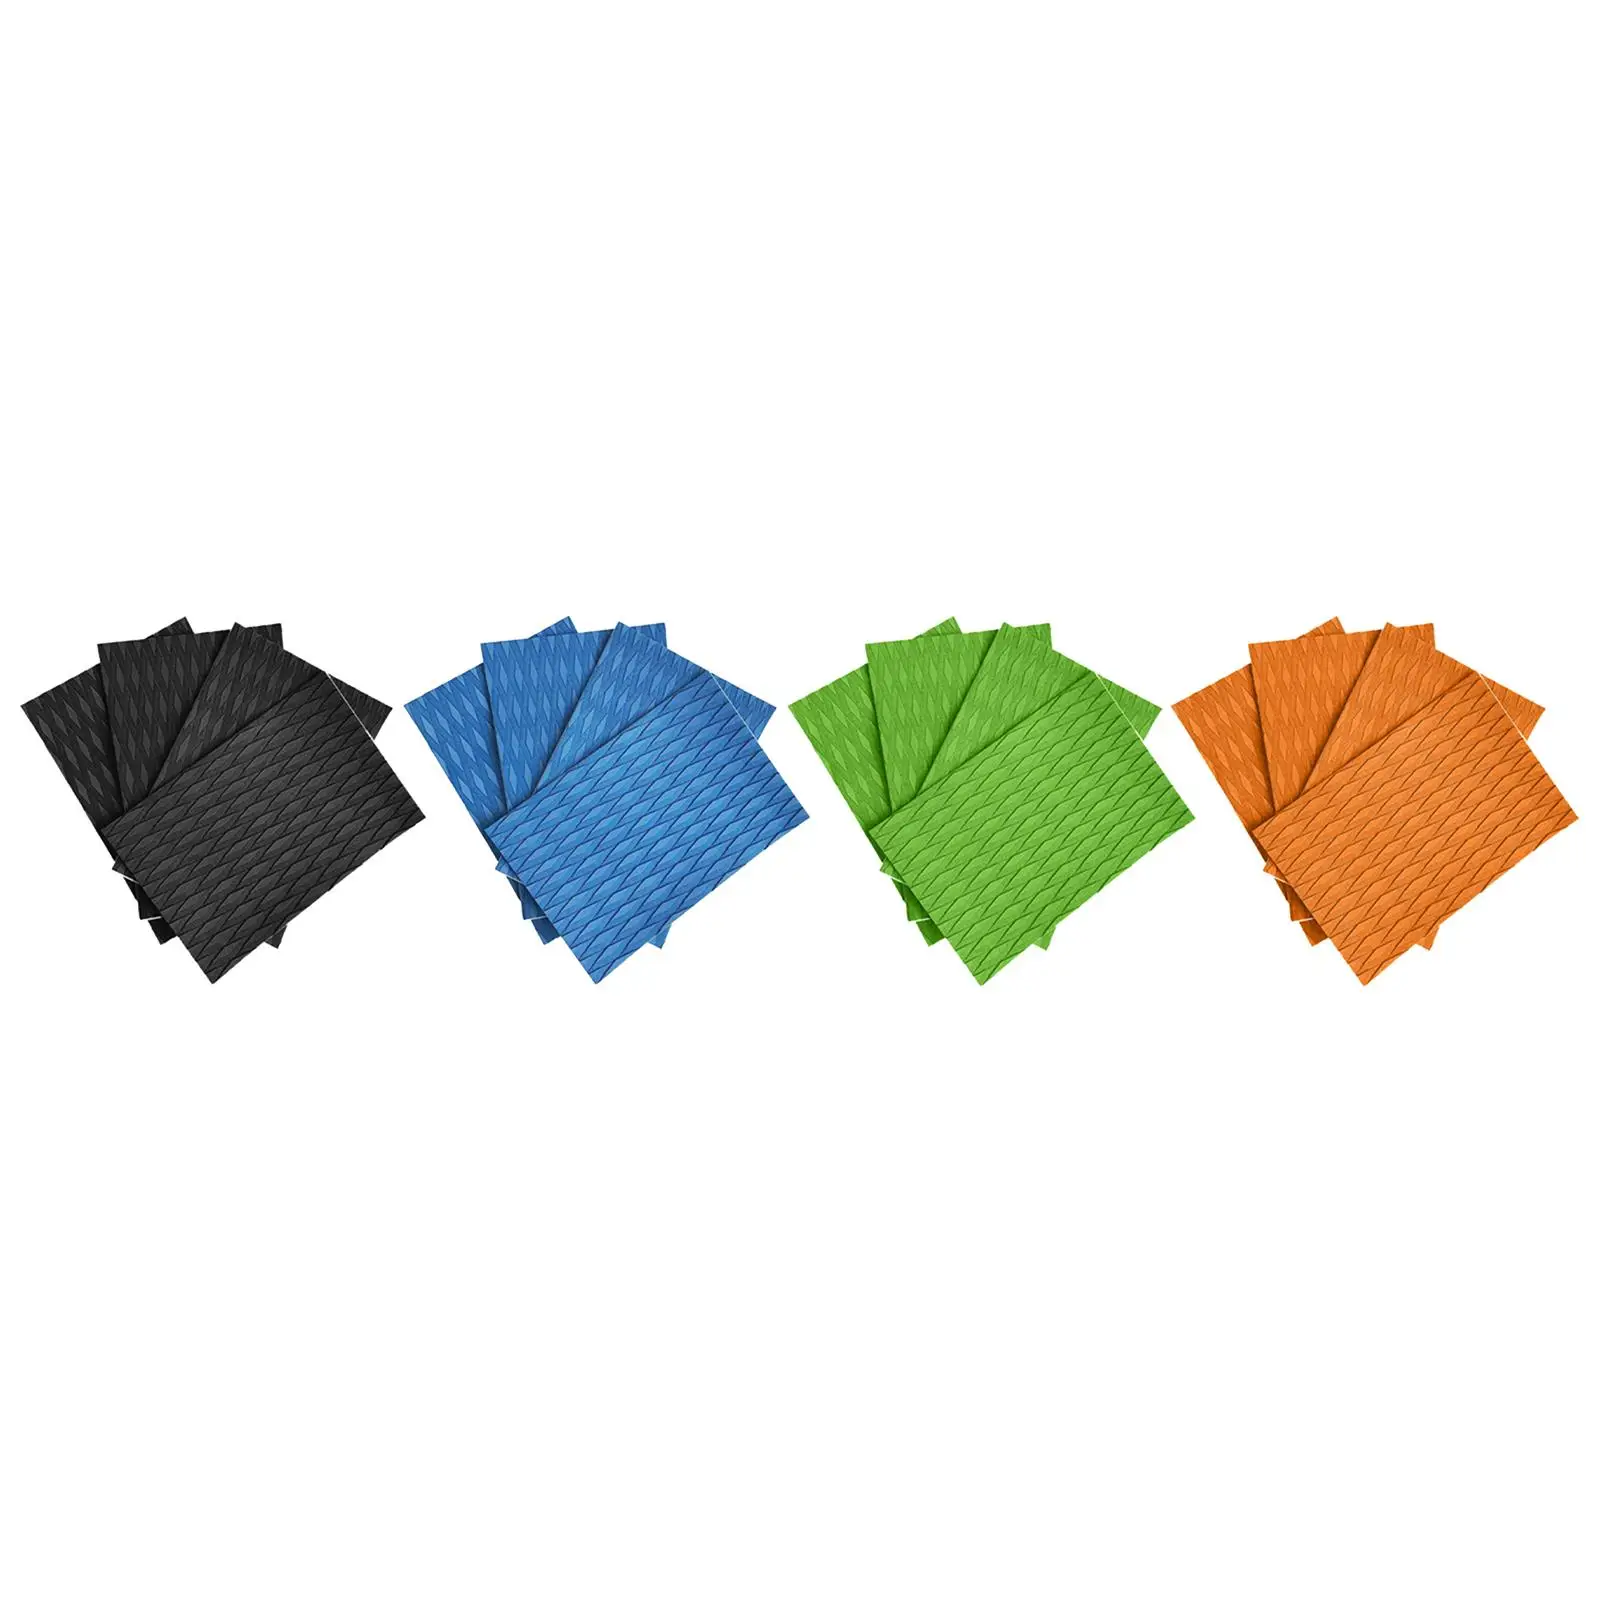 4 Universal DIY Non-Slip Grip Mats Versatile Cuttable EVA Foam Sheets For